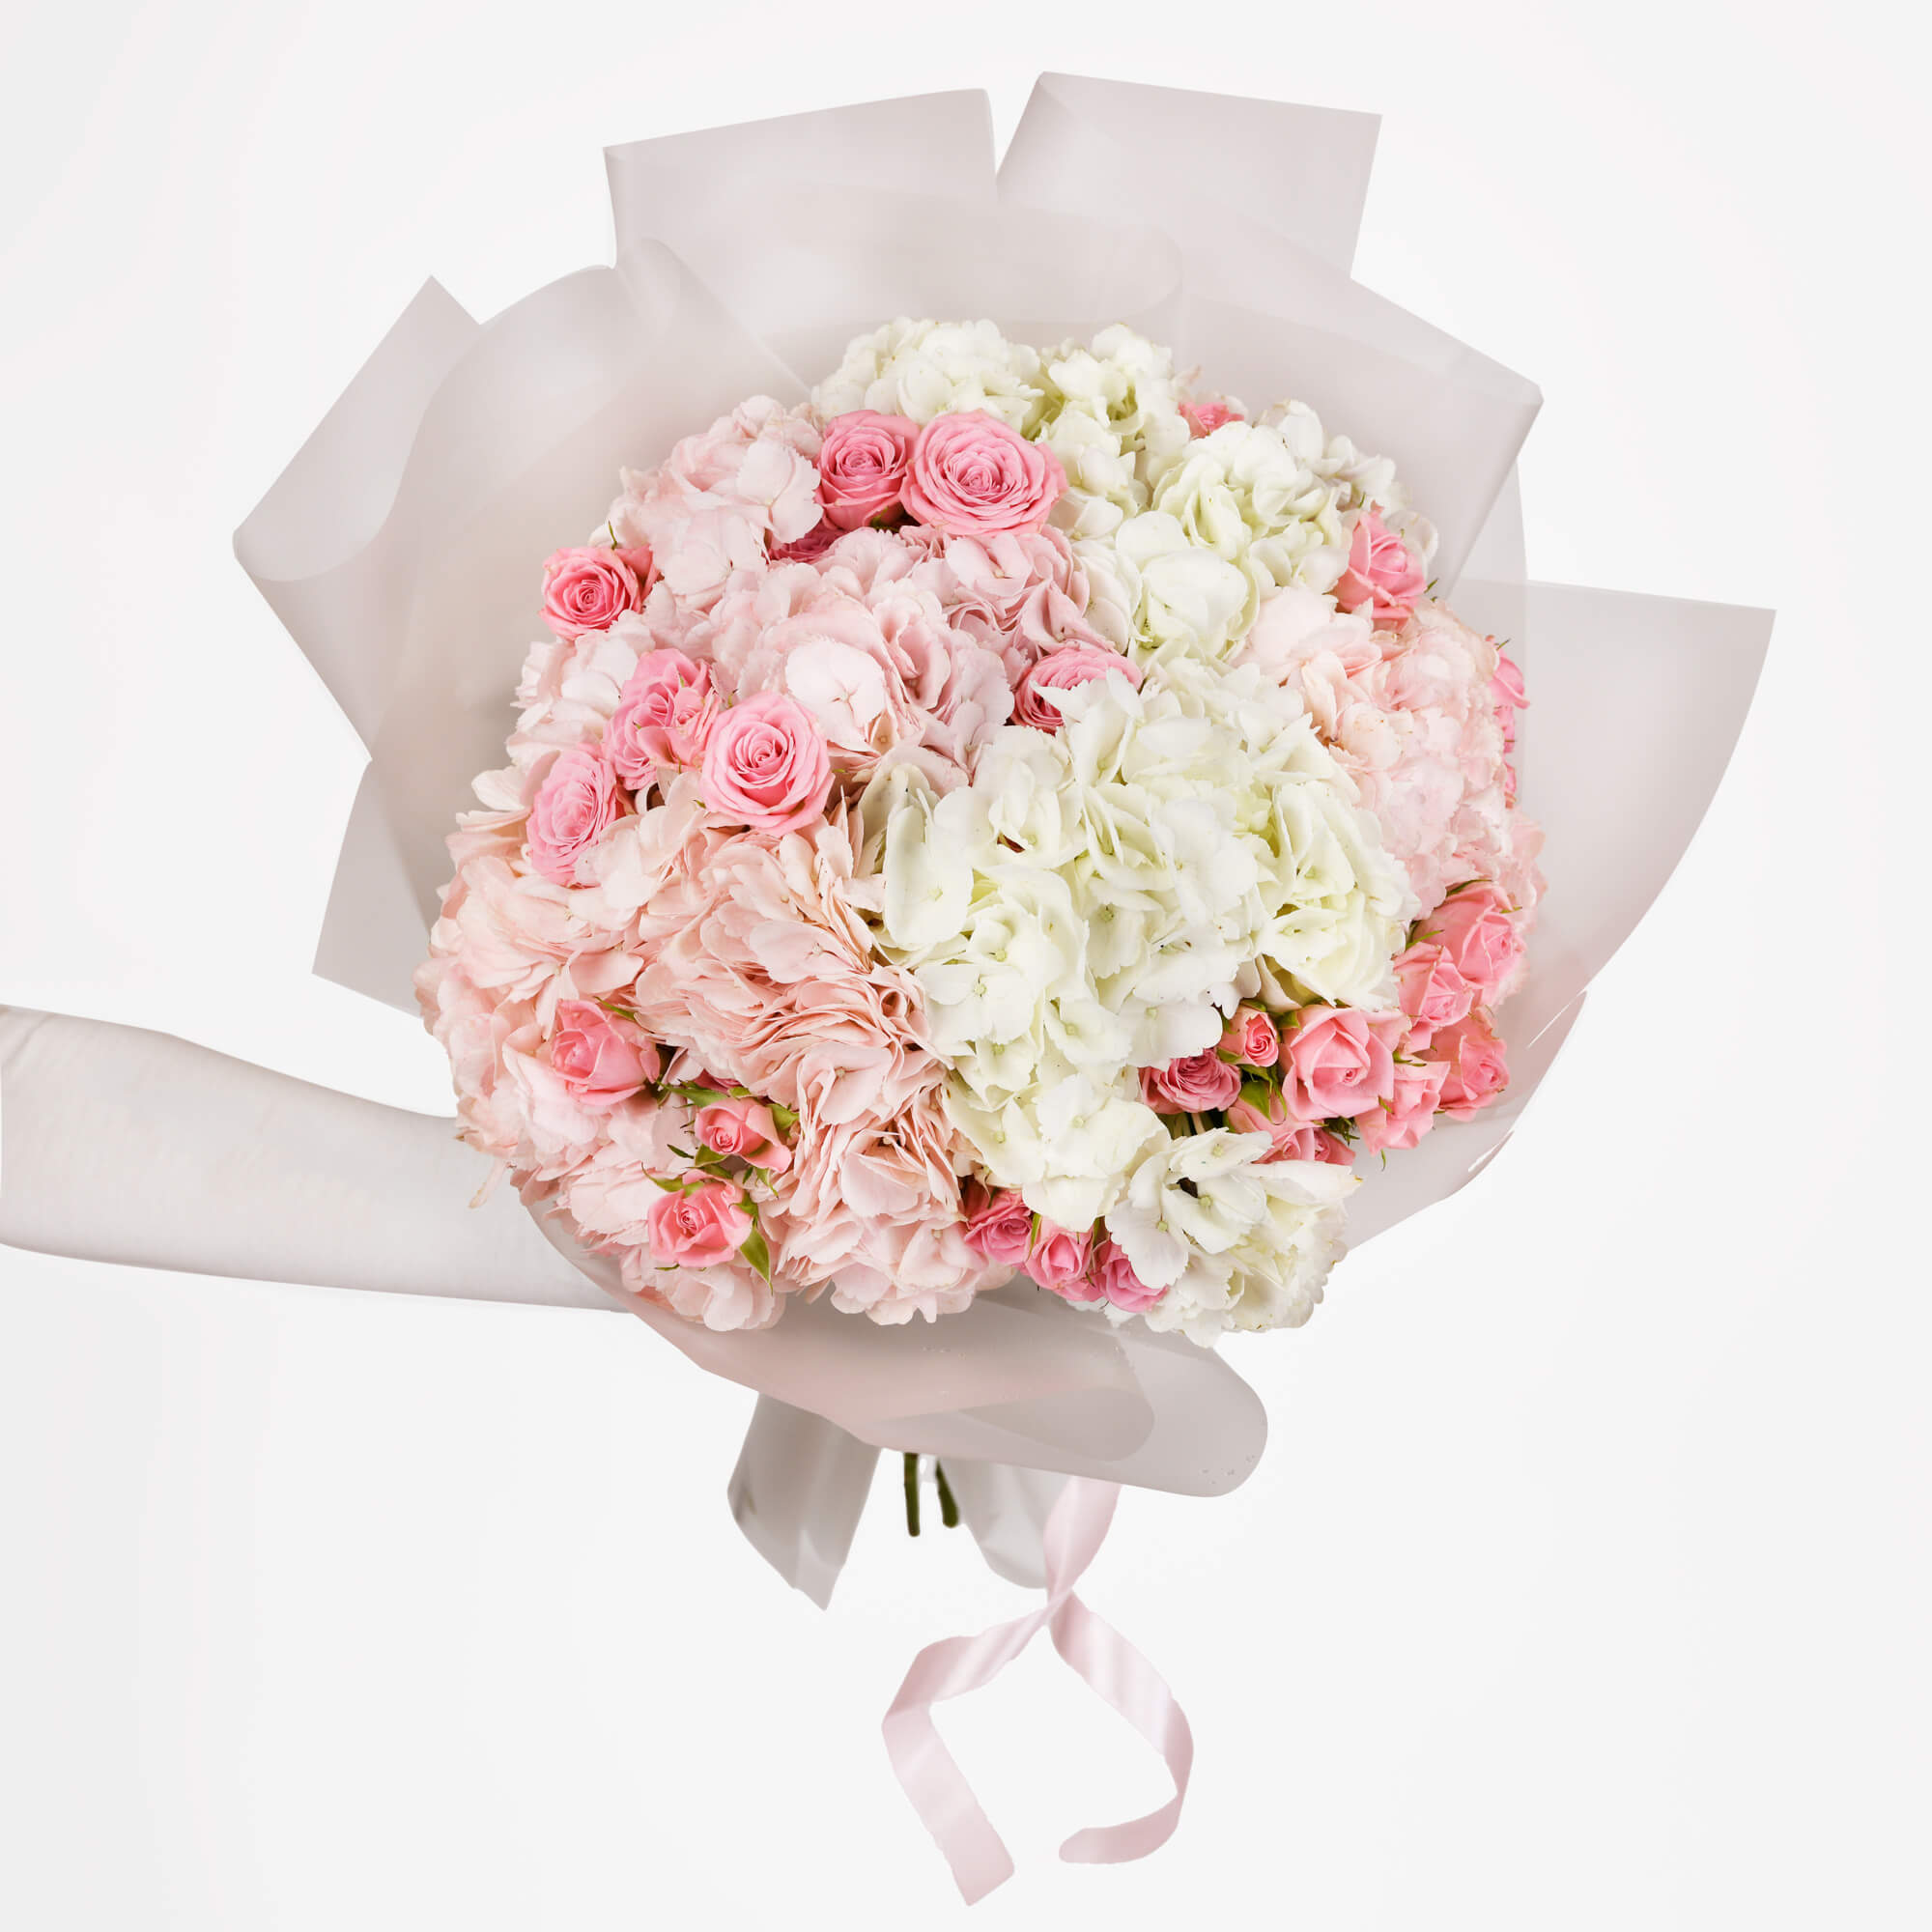 Buchet cu hortensii albe si roz